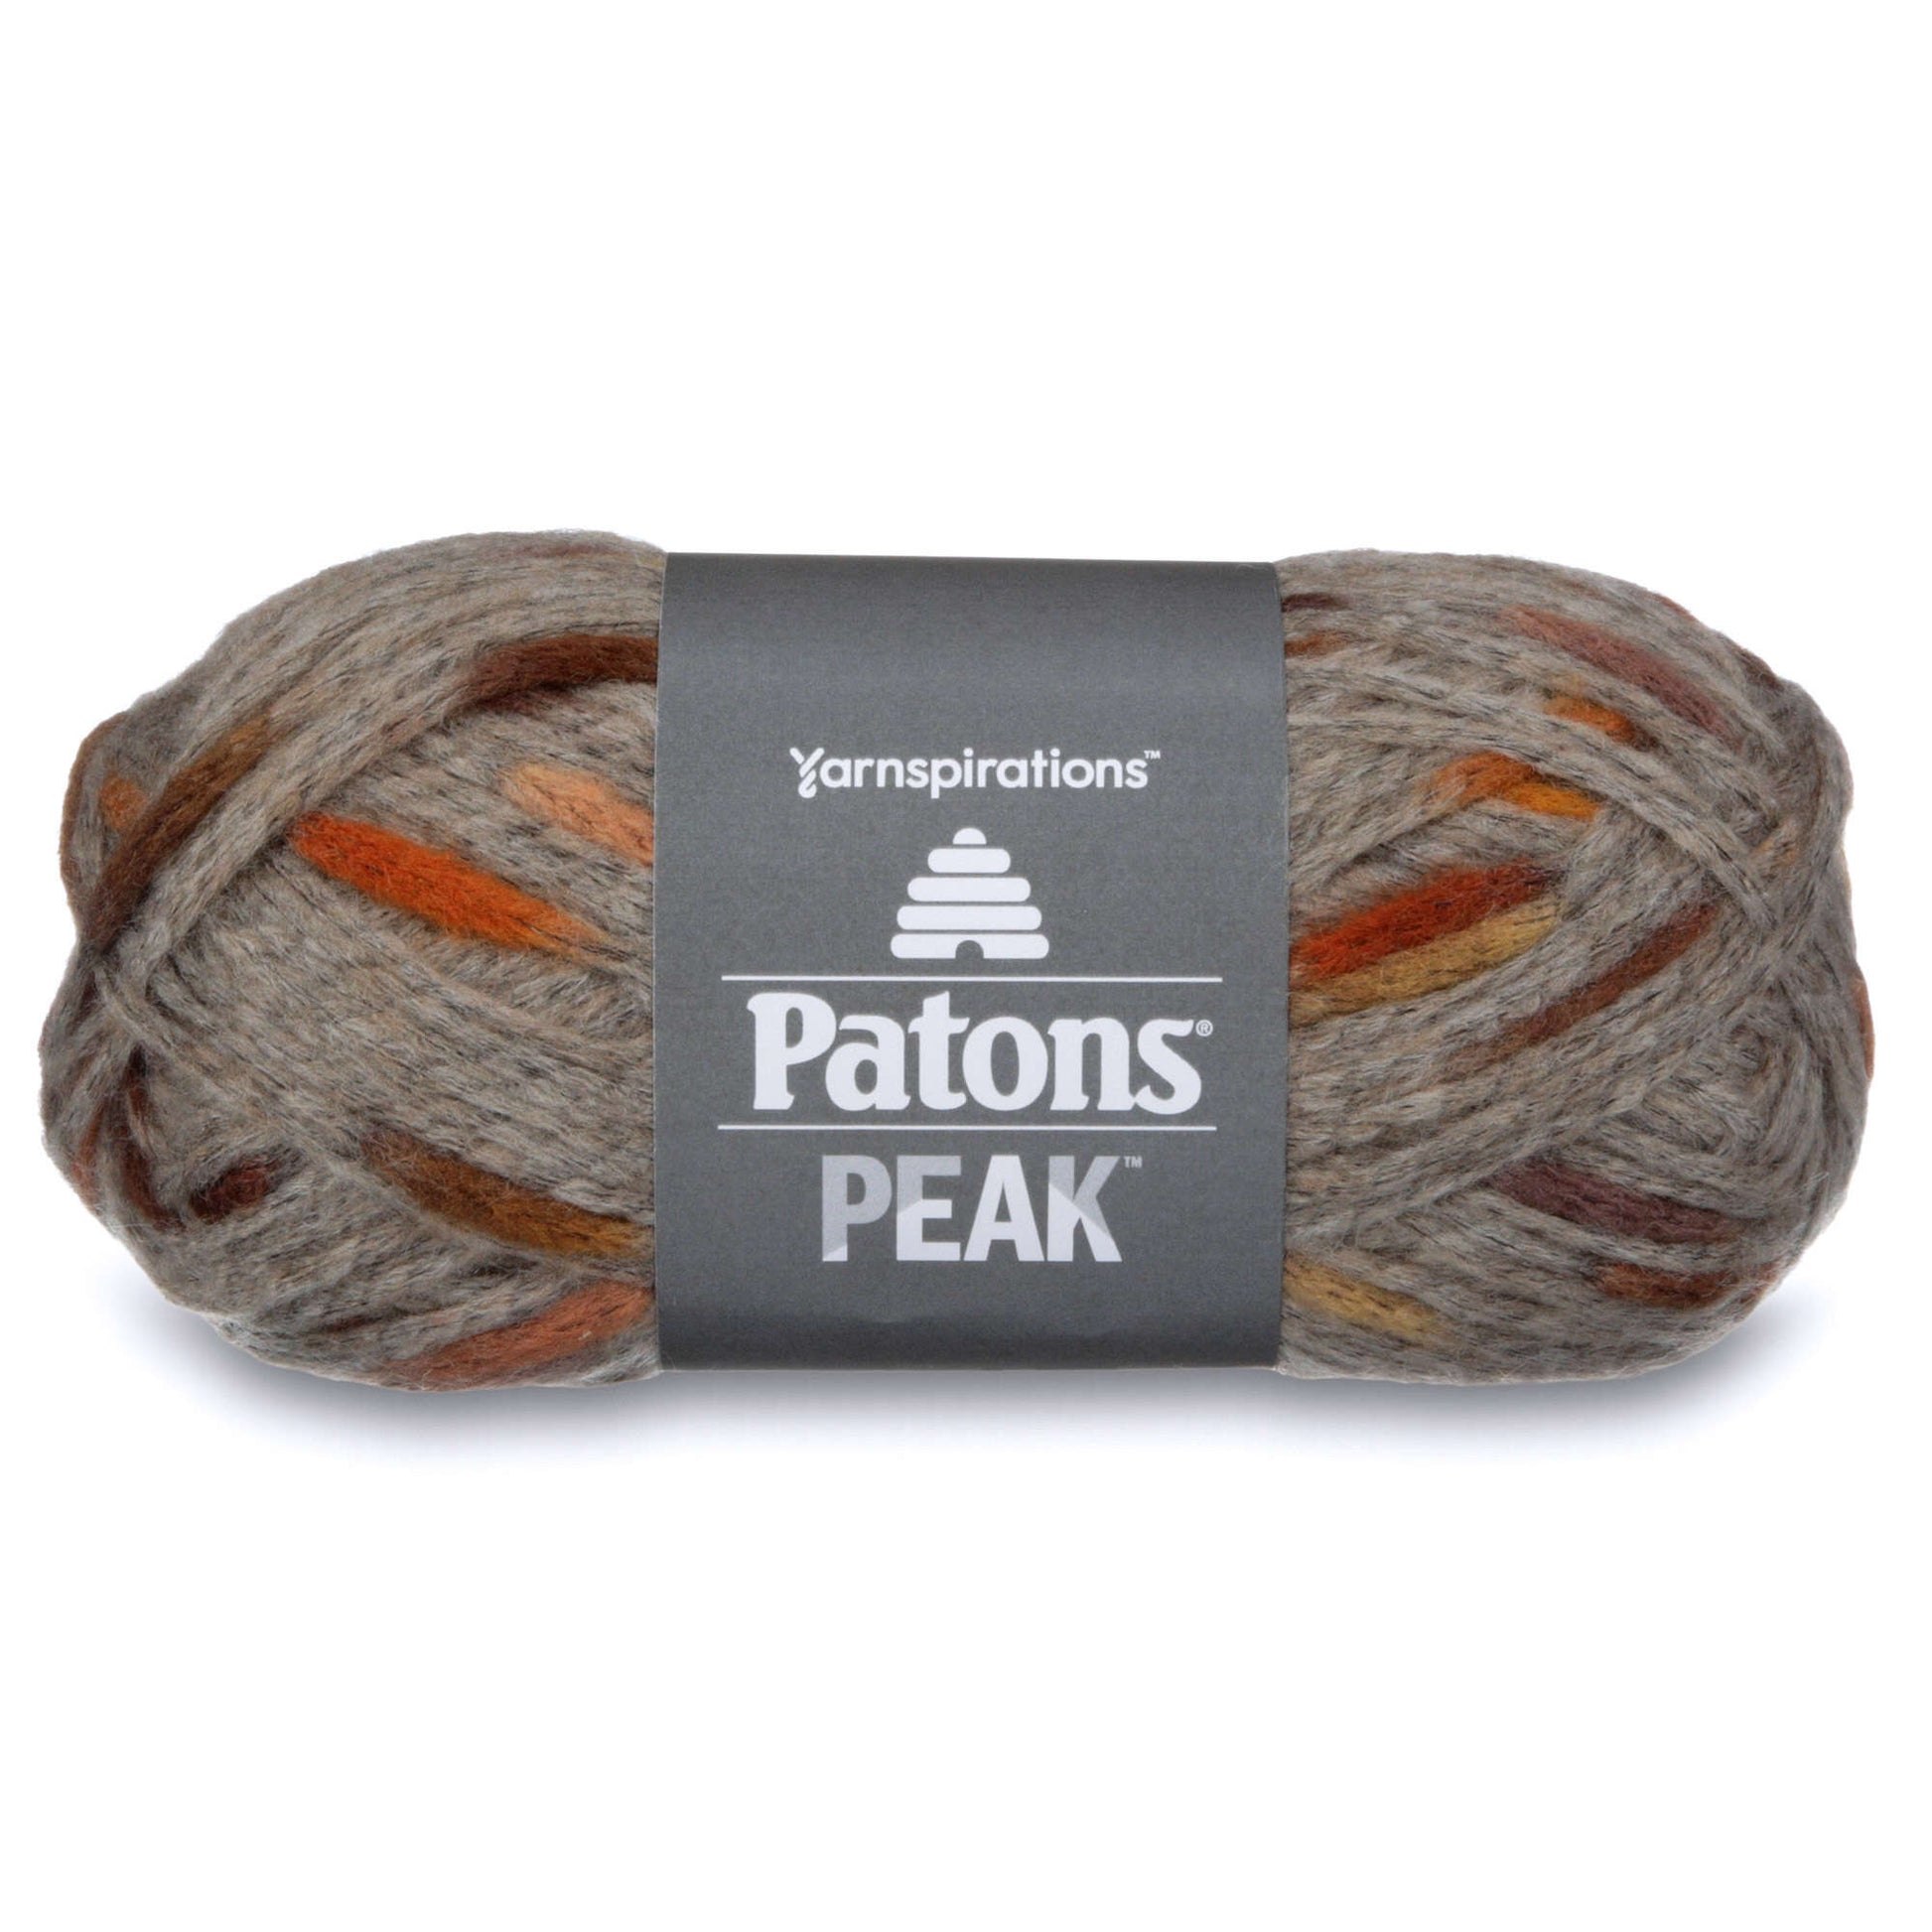 Patons Peak Yarn - Discontinued